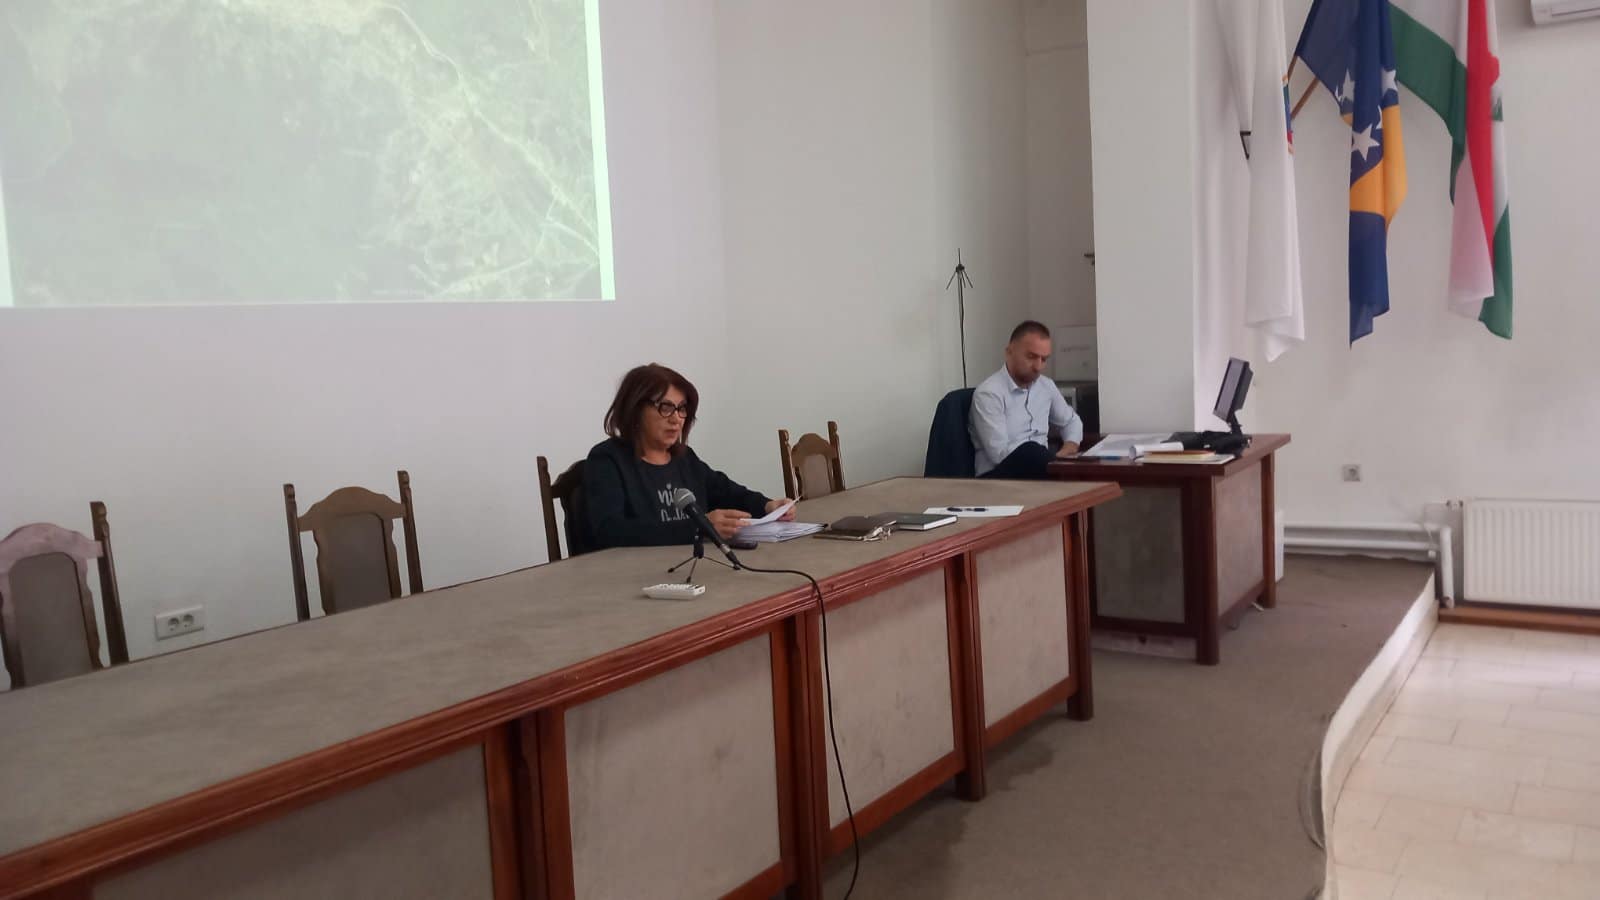 Održana Javna rasprava o Zoning planu radno-poslovne zone “Heldovi-Slimena” Travnik